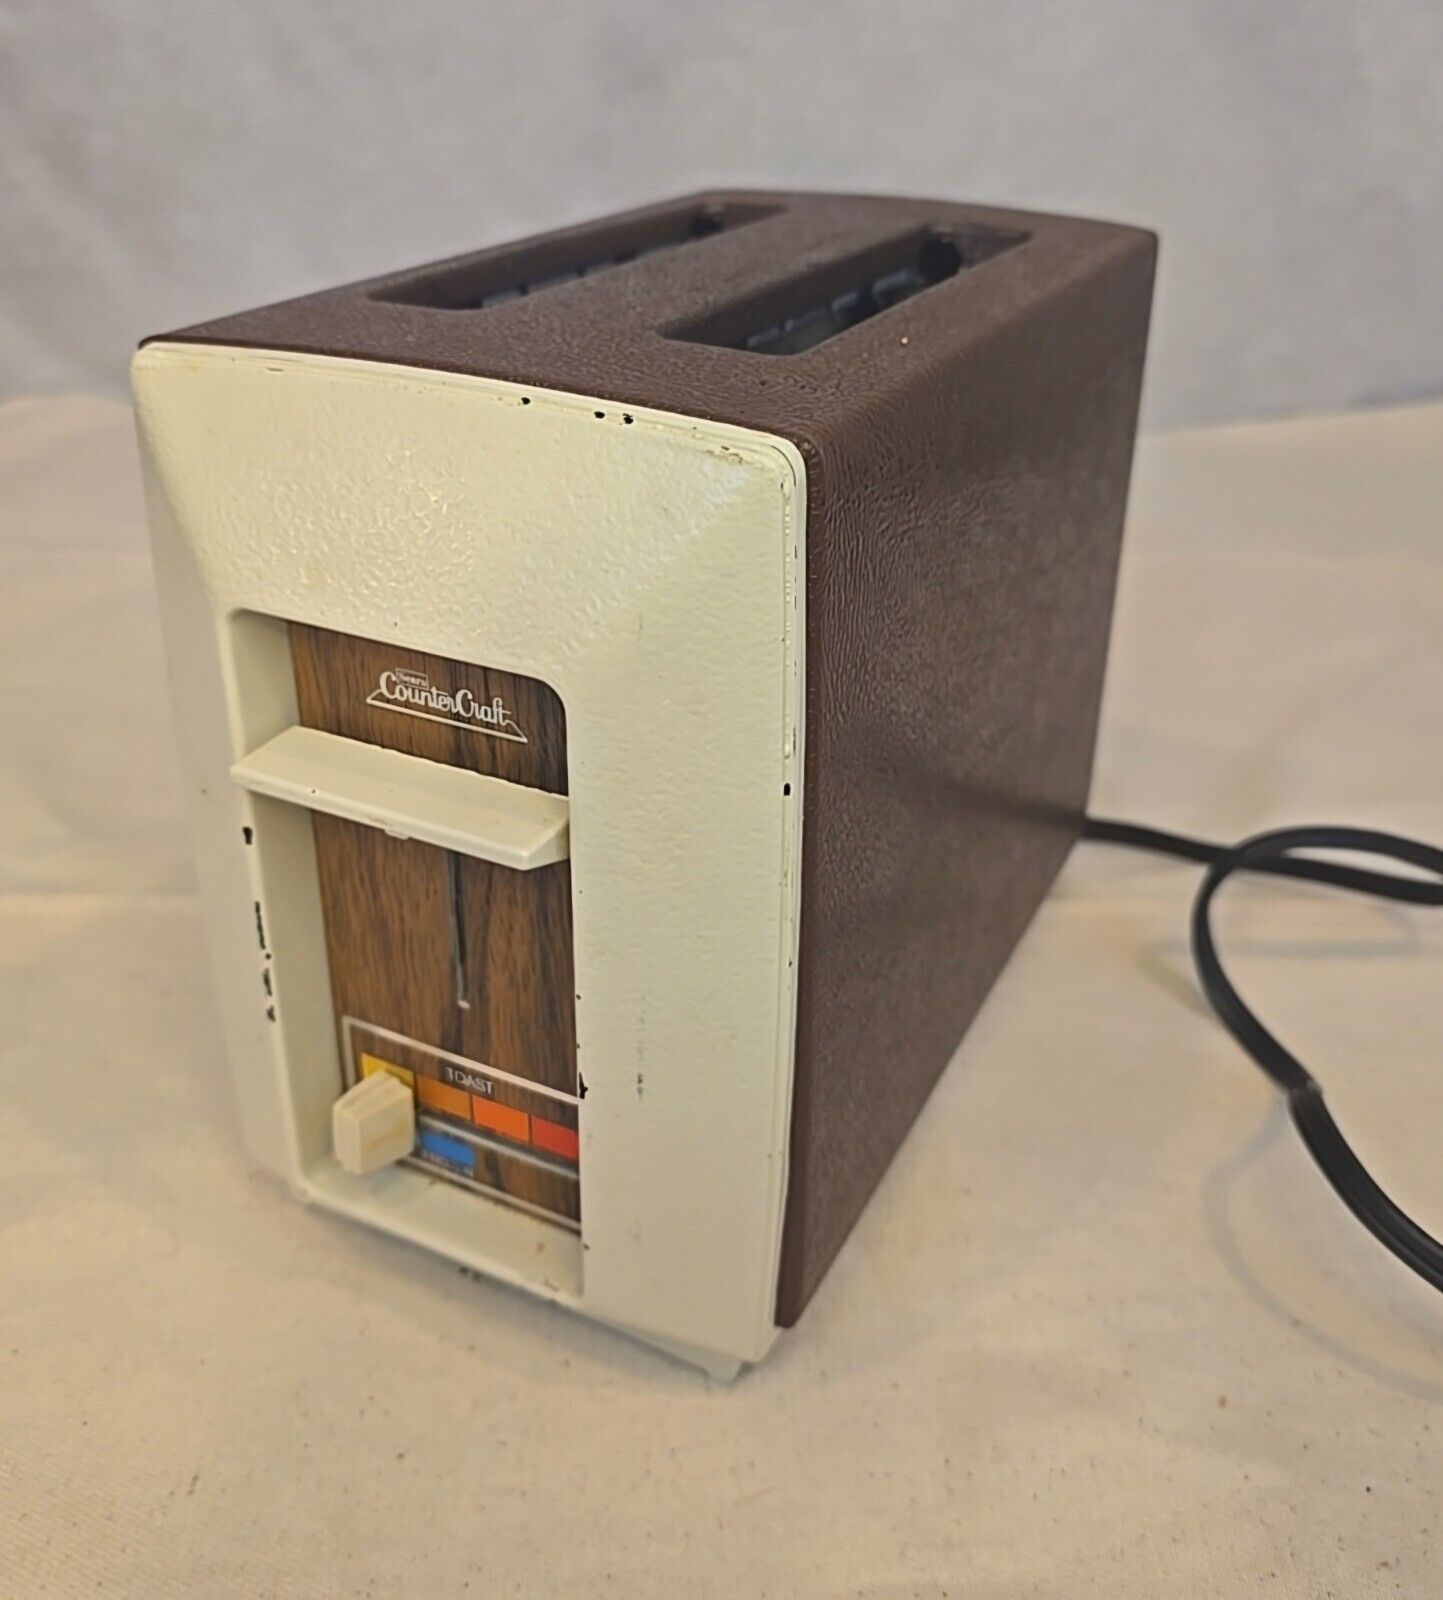 Vintage Toaster Sears Counter Craft 2 Slice Model 360 630590 1970s Grandpa Core